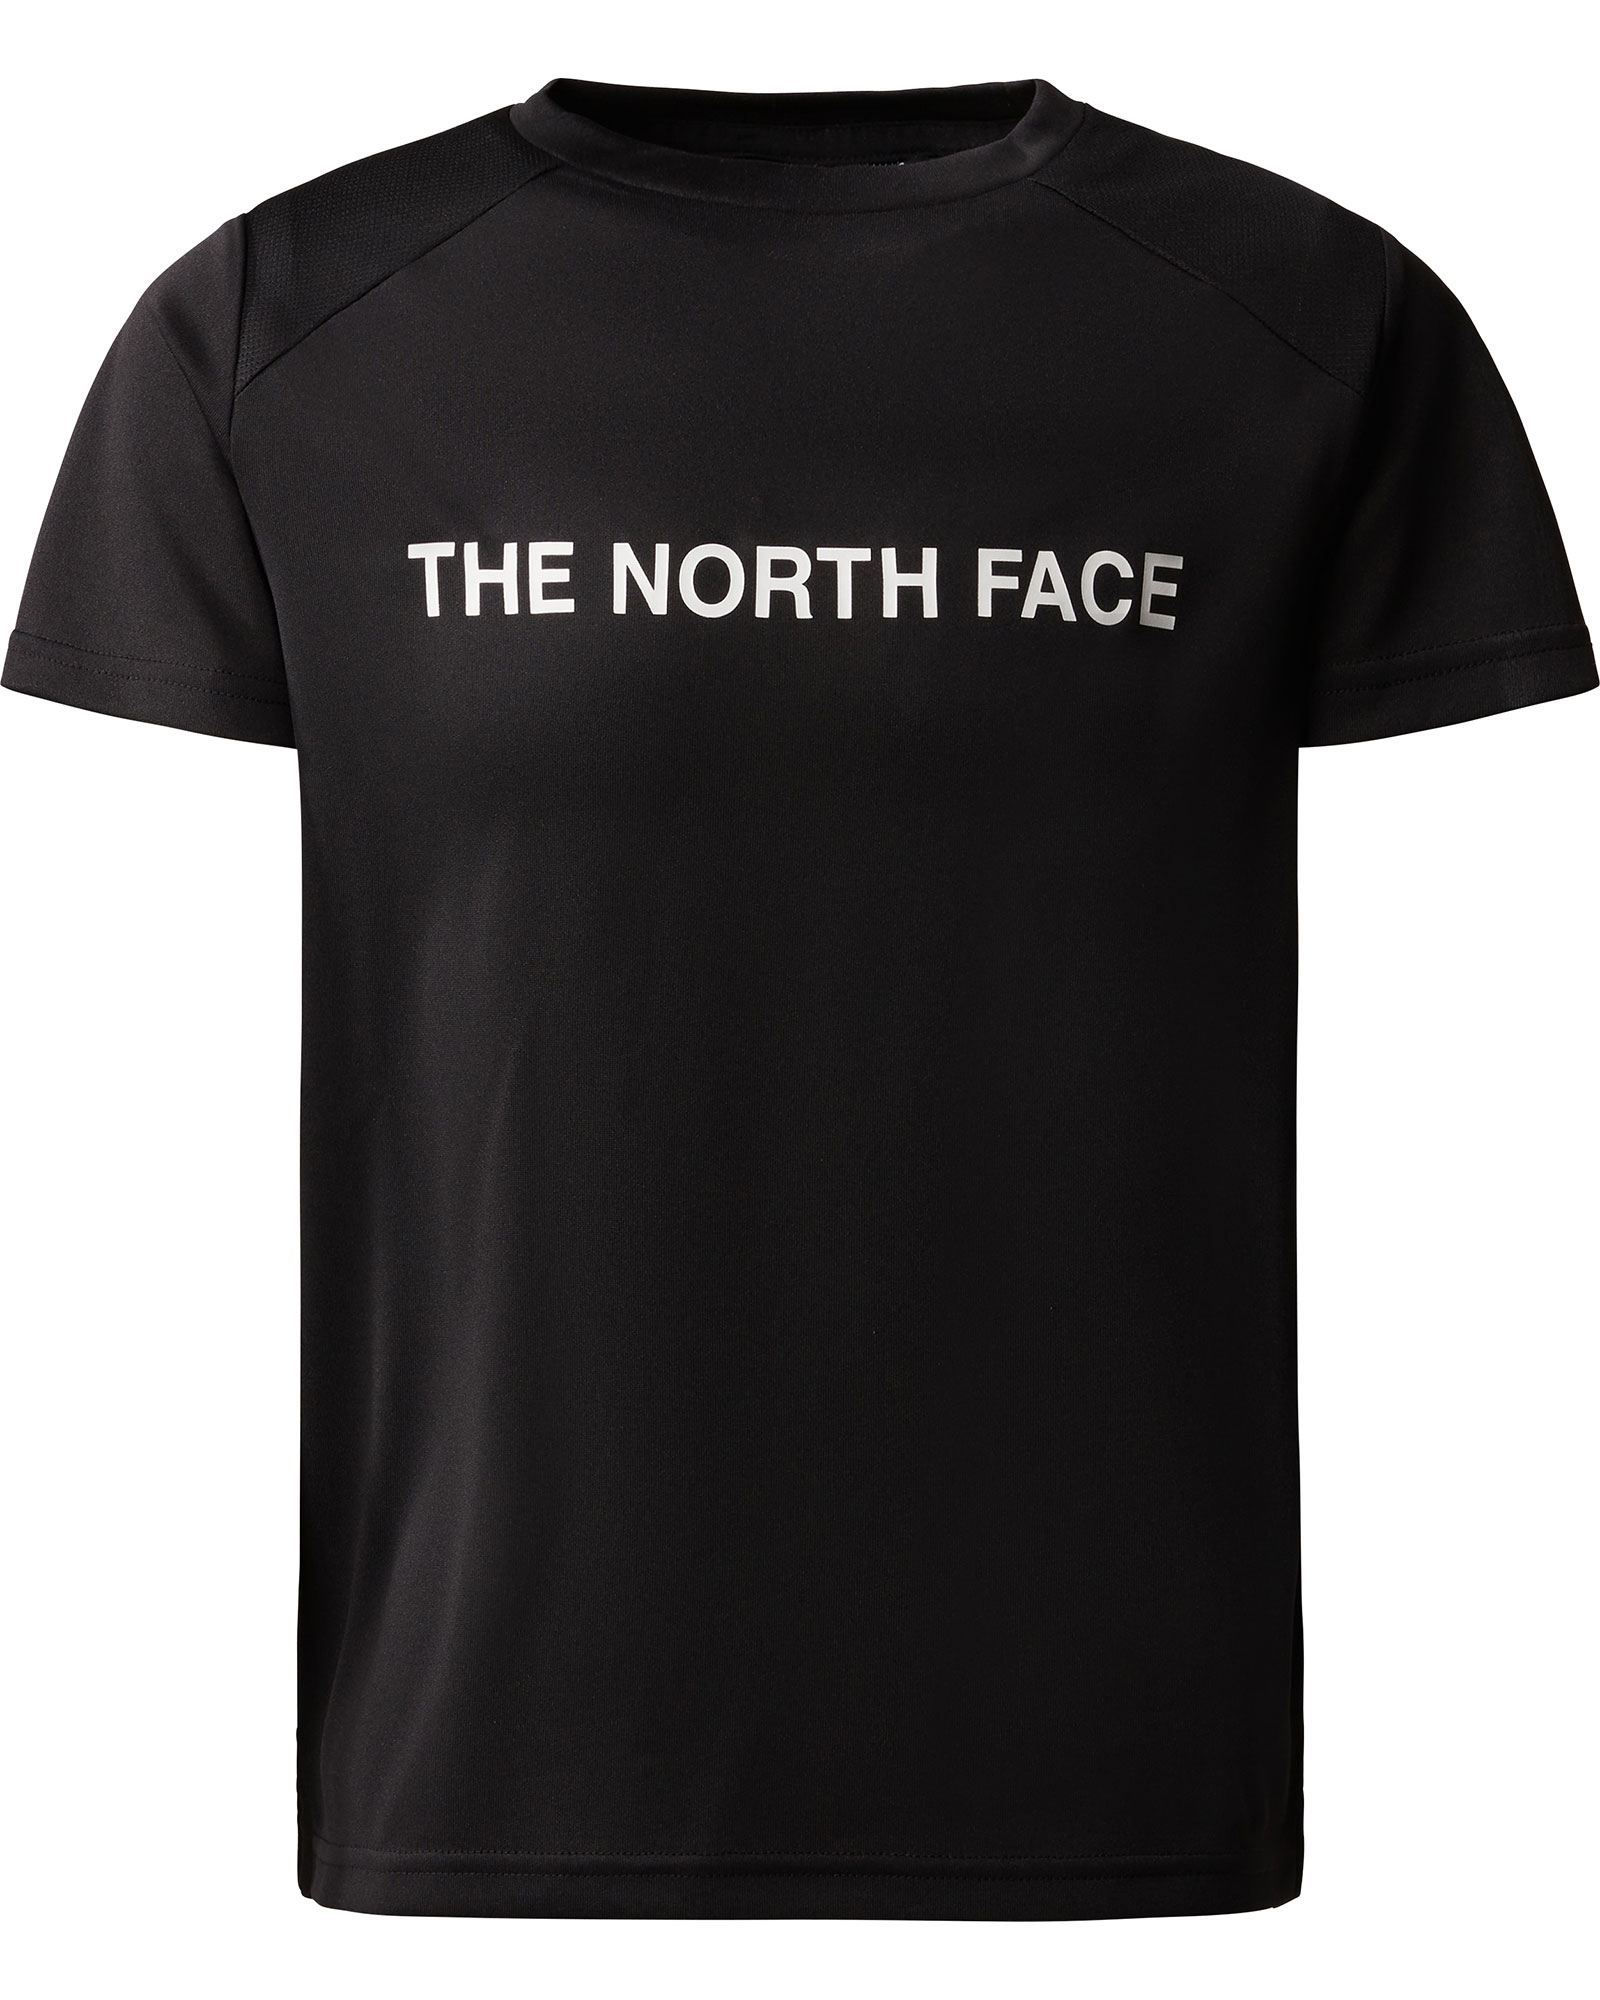 The North Face Mt Blanc Gps Mens T-shirt